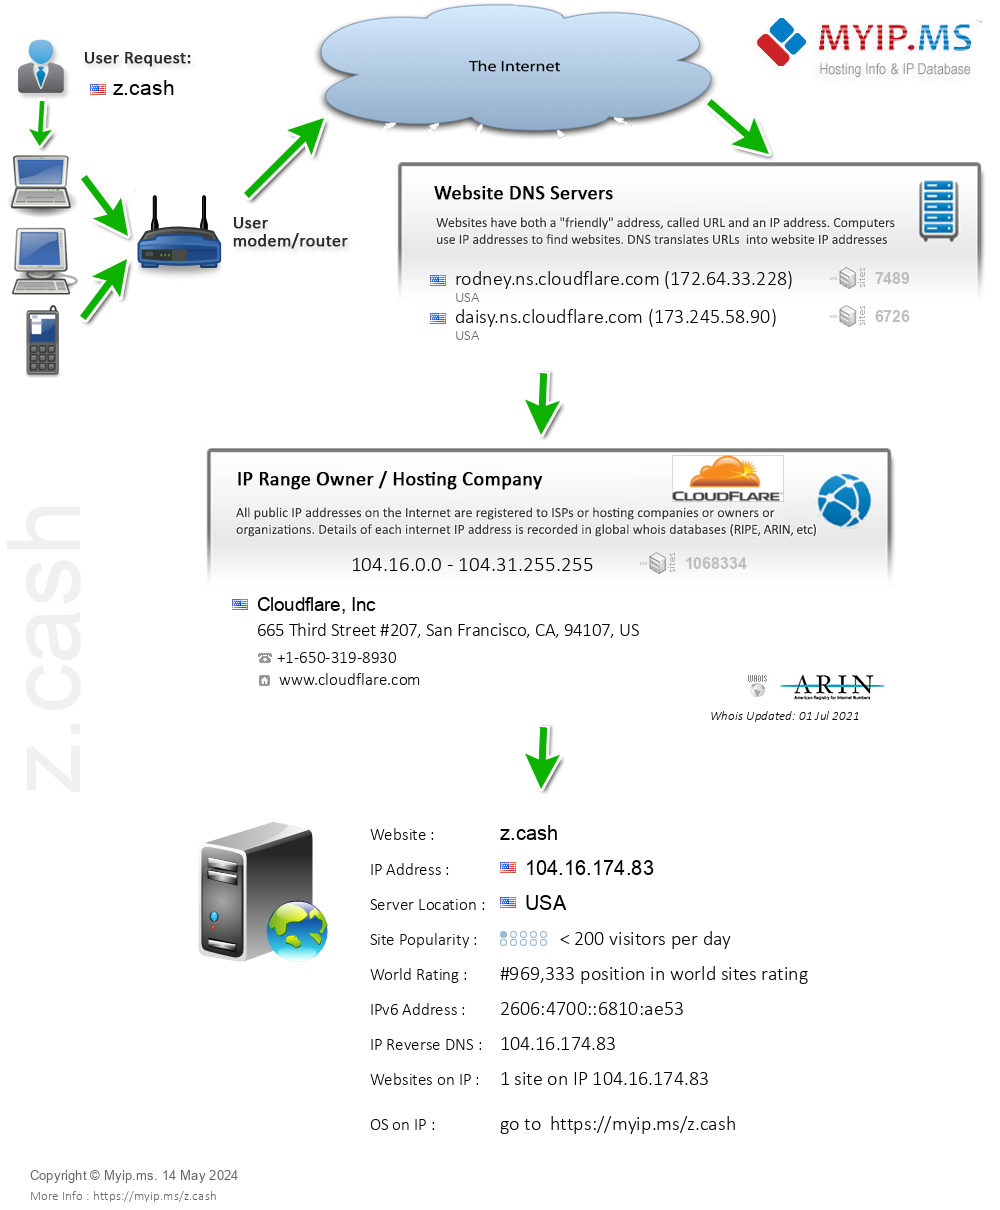 Z.cash - Website Hosting Visual IP Diagram